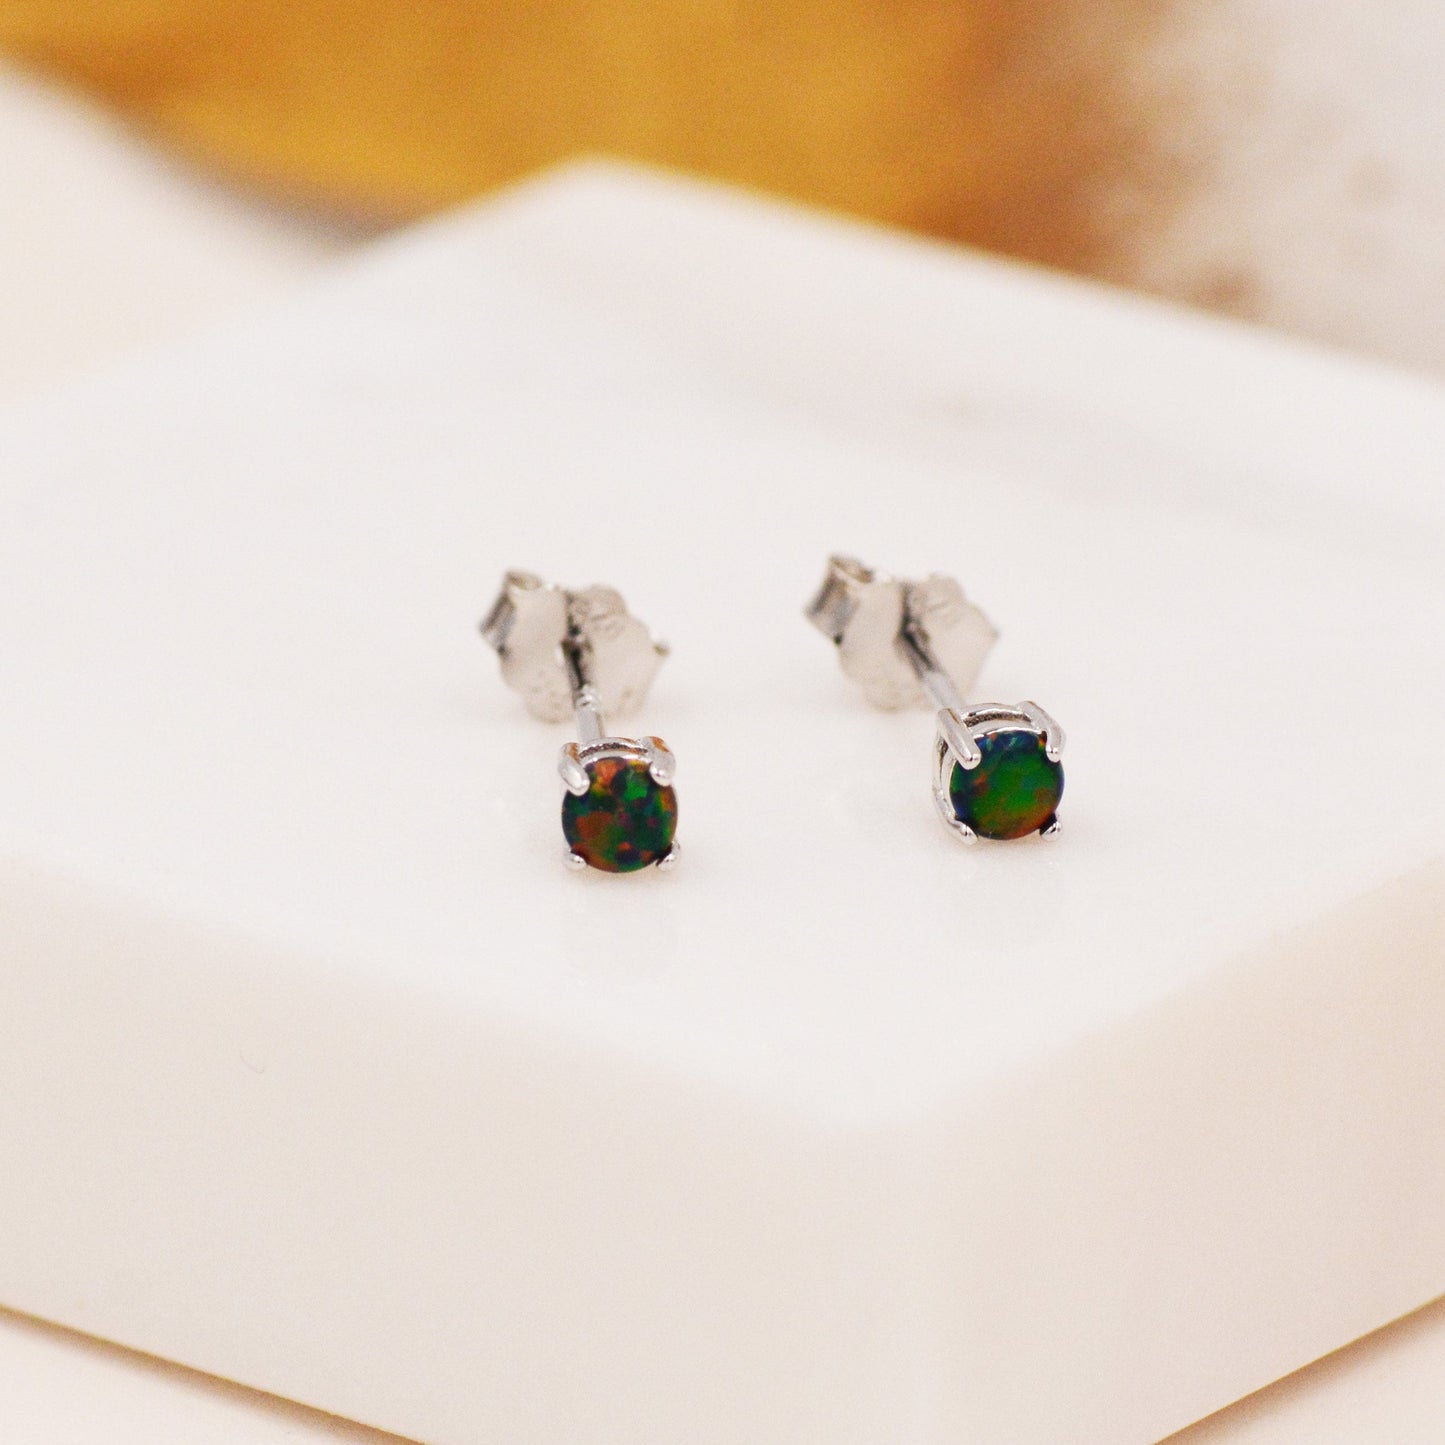 Black Opal Stud Earrings in Sterling Silver - 3 sizes 3mm 4mm 5mm - Lab Opal Stud Earrings  - Semi Precious Gemstone